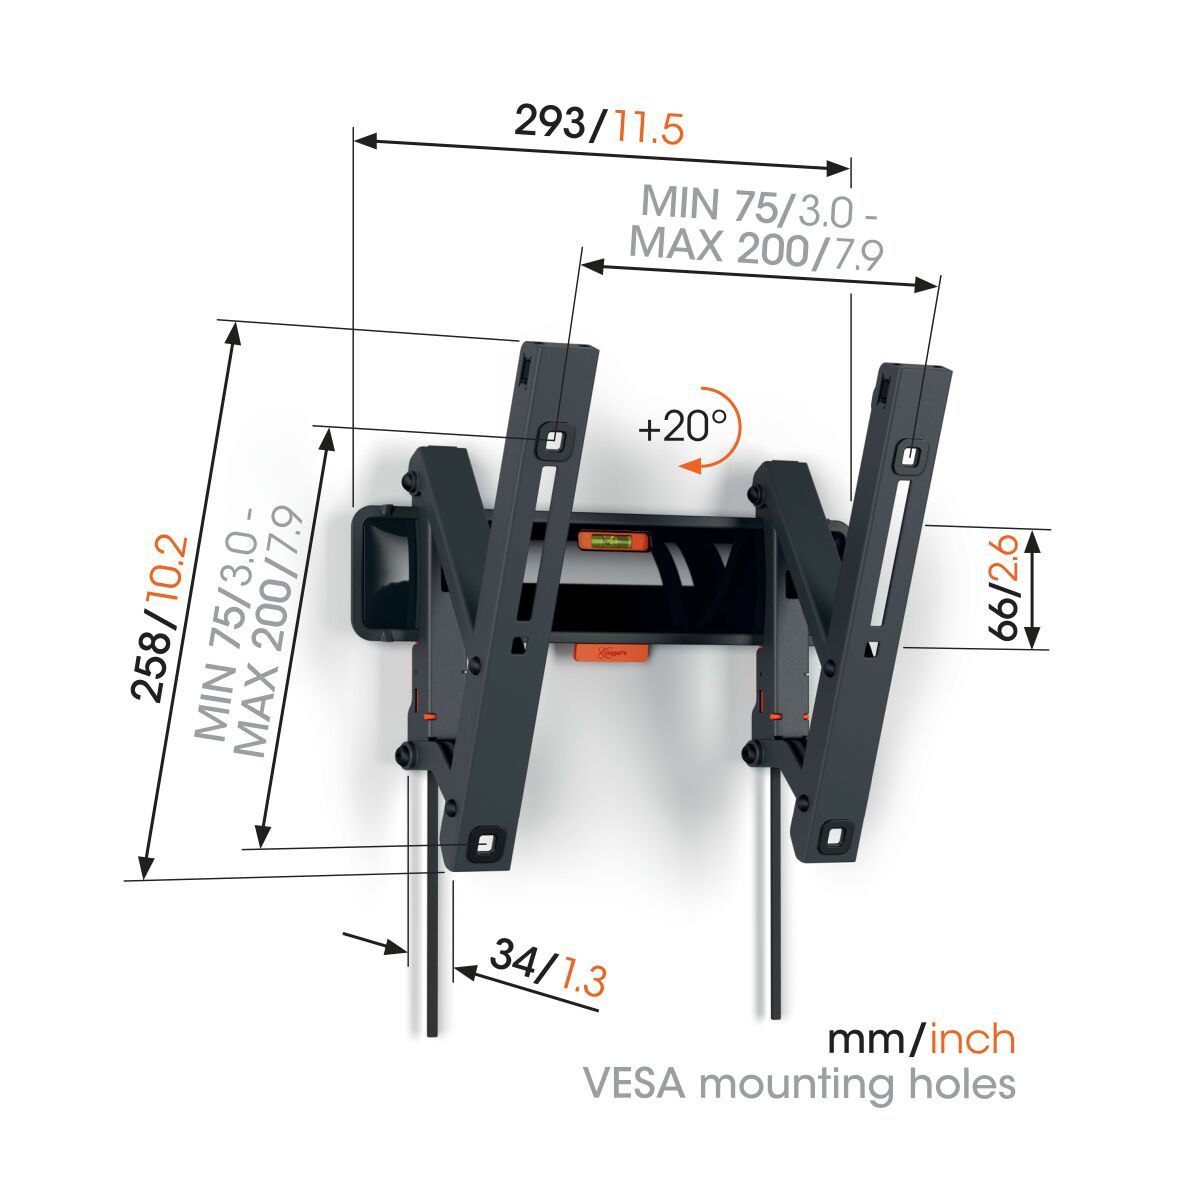 Vogel's TVM 3215 Tilting TV Wall Mount - Suitable for 19 up to 43 inch TVs - Tilt up to 20° - Dimensions